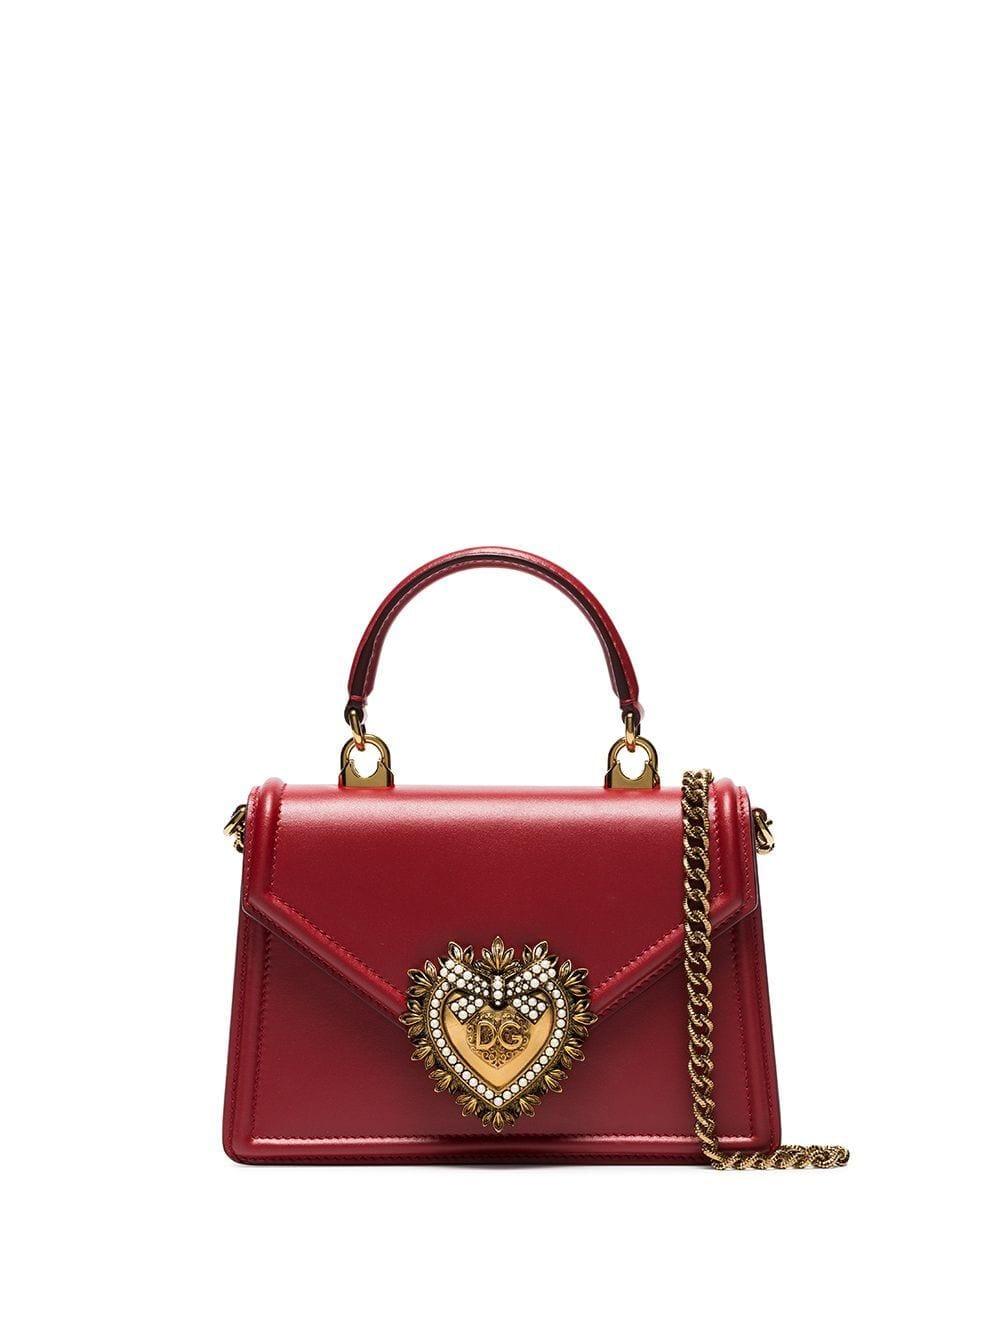 Dolce & Gabbana Medium Devotion Bag in Red | Lyst